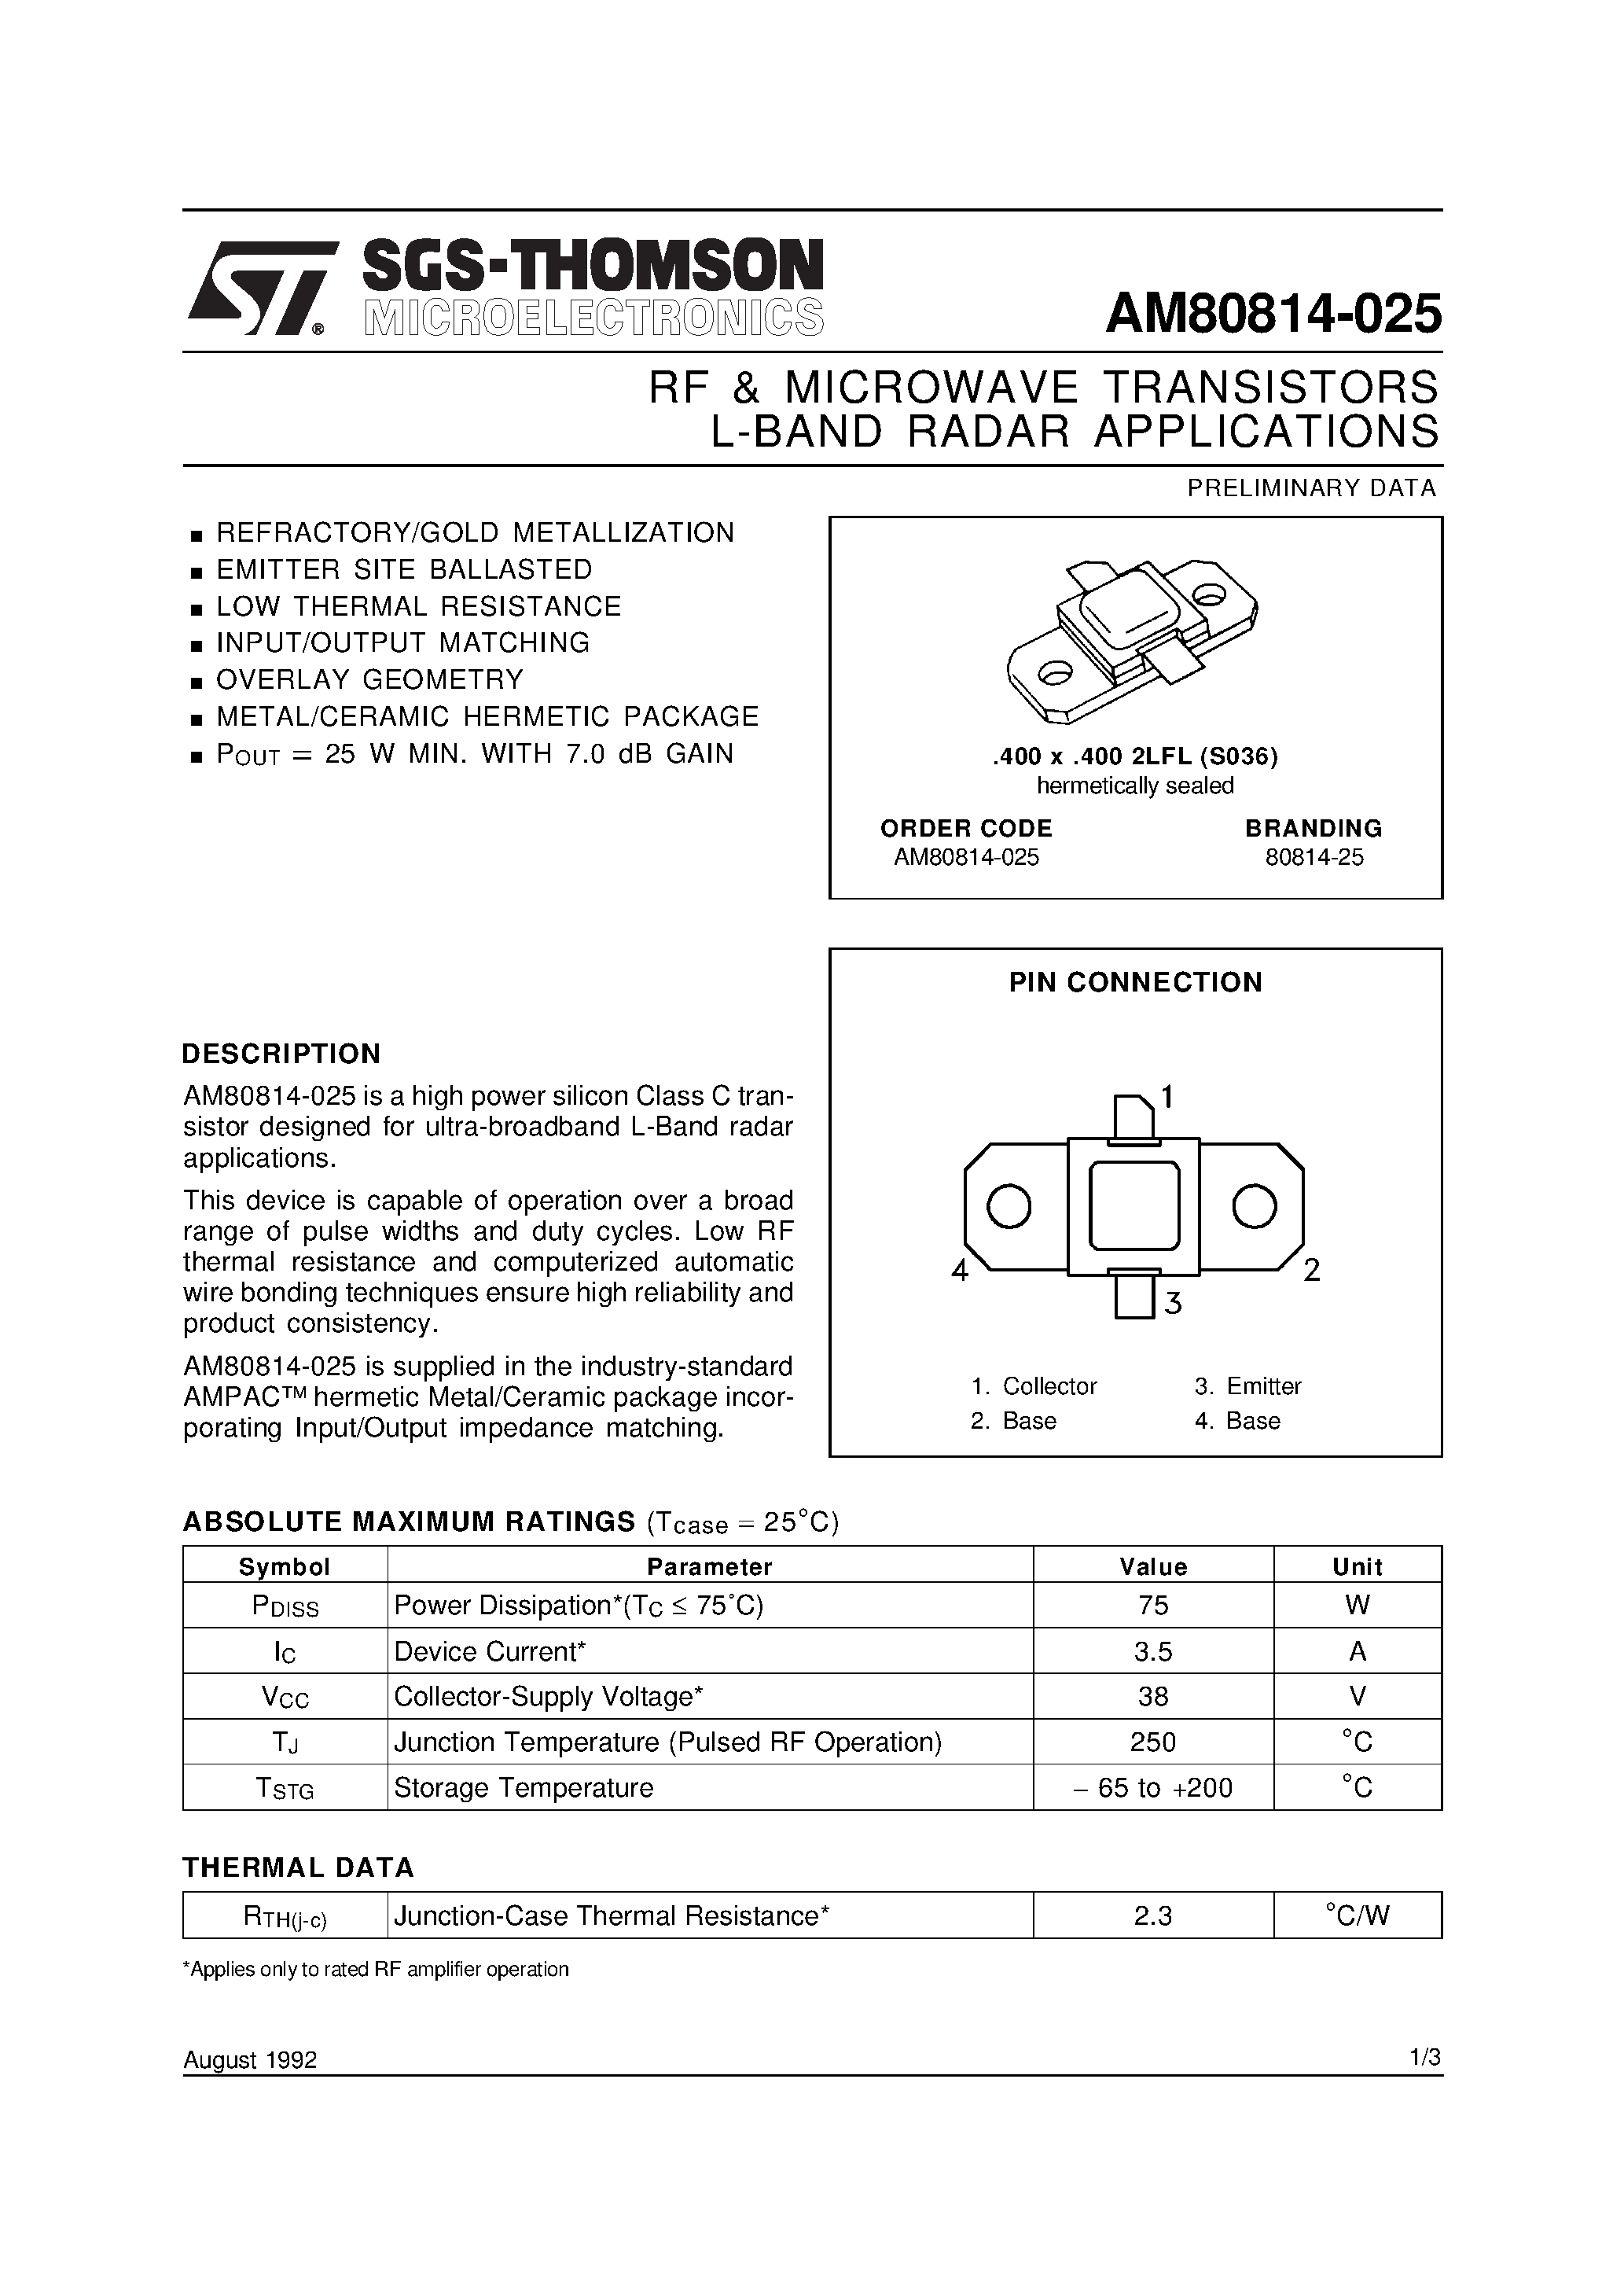 Datasheet AM80814-025 - L-BAND RADAR APPLICATIONS RF & MICROWAVE TRANSISTORS page 1